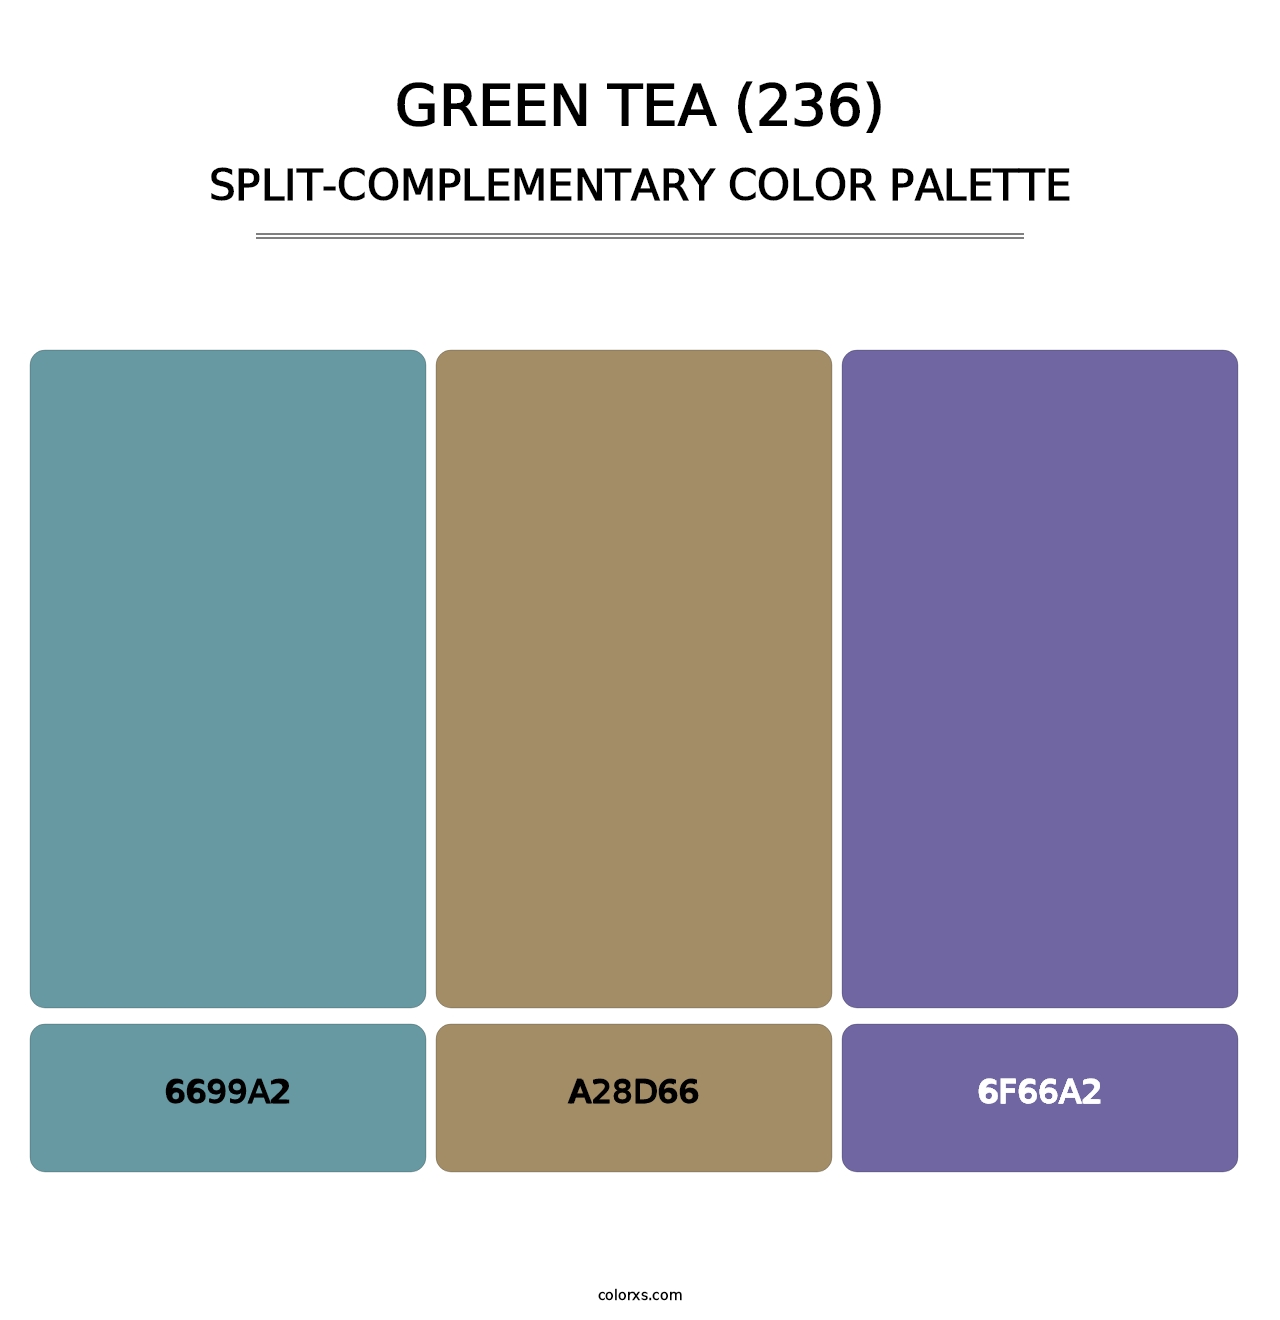 Green Tea (236) - Split-Complementary Color Palette